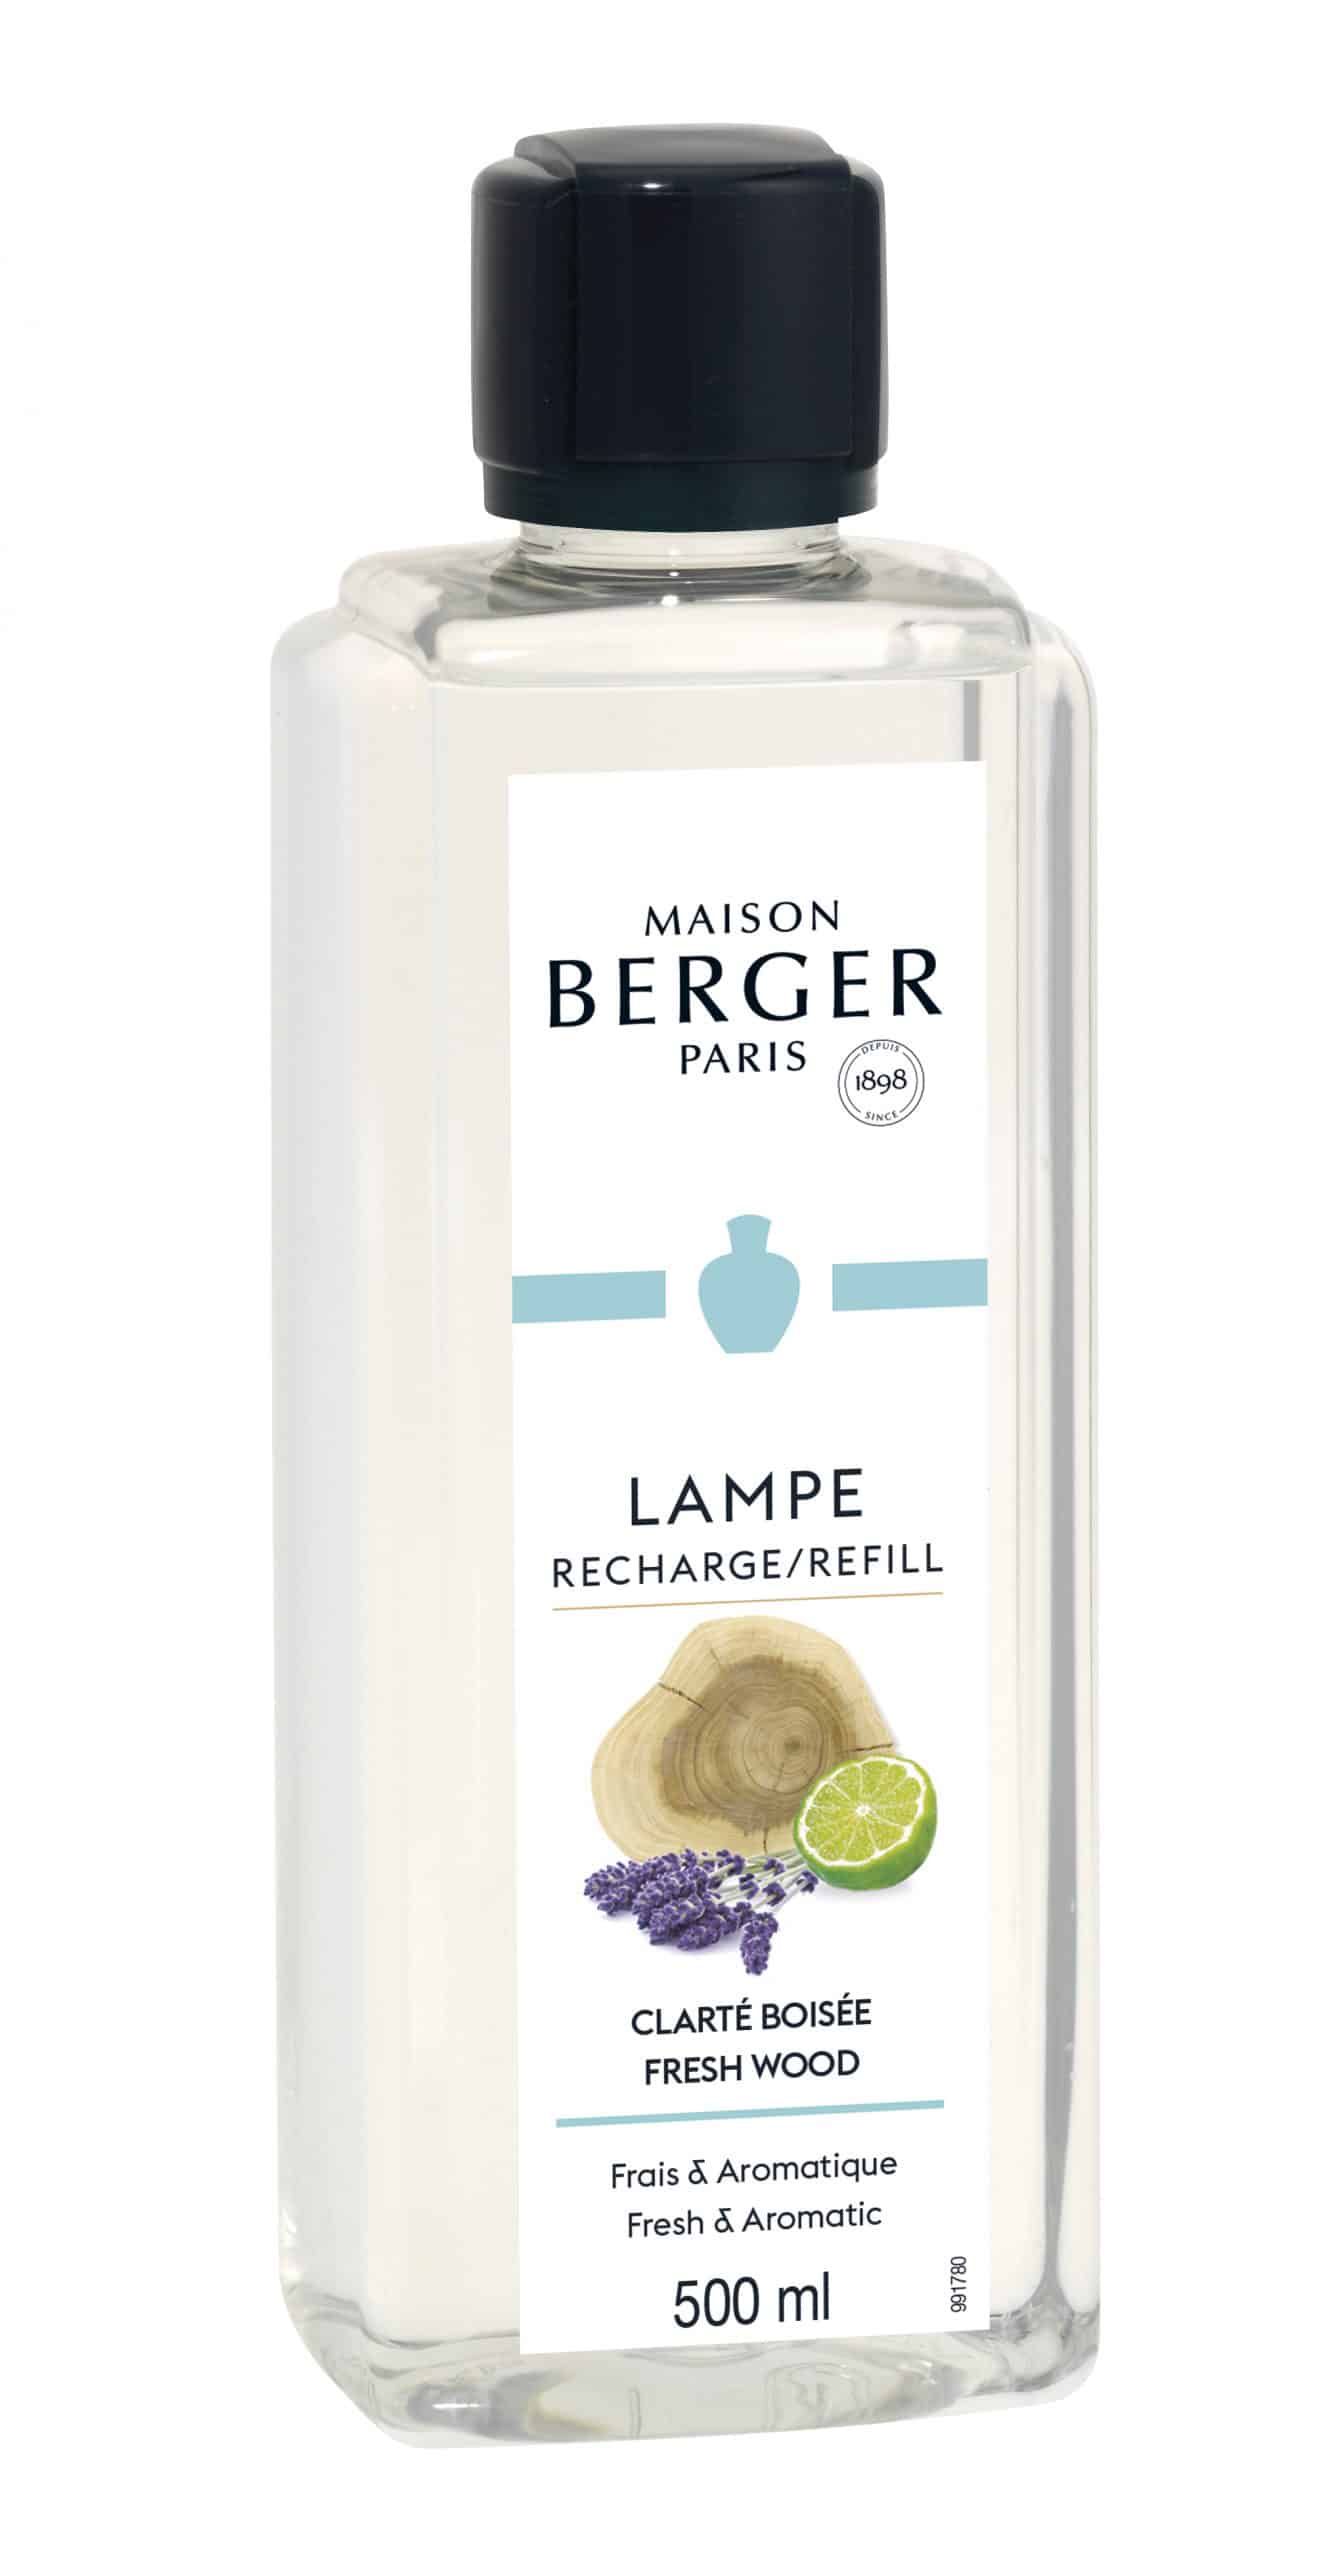 Maison Berger Paris - parfum Fresh Wood - 500 ml